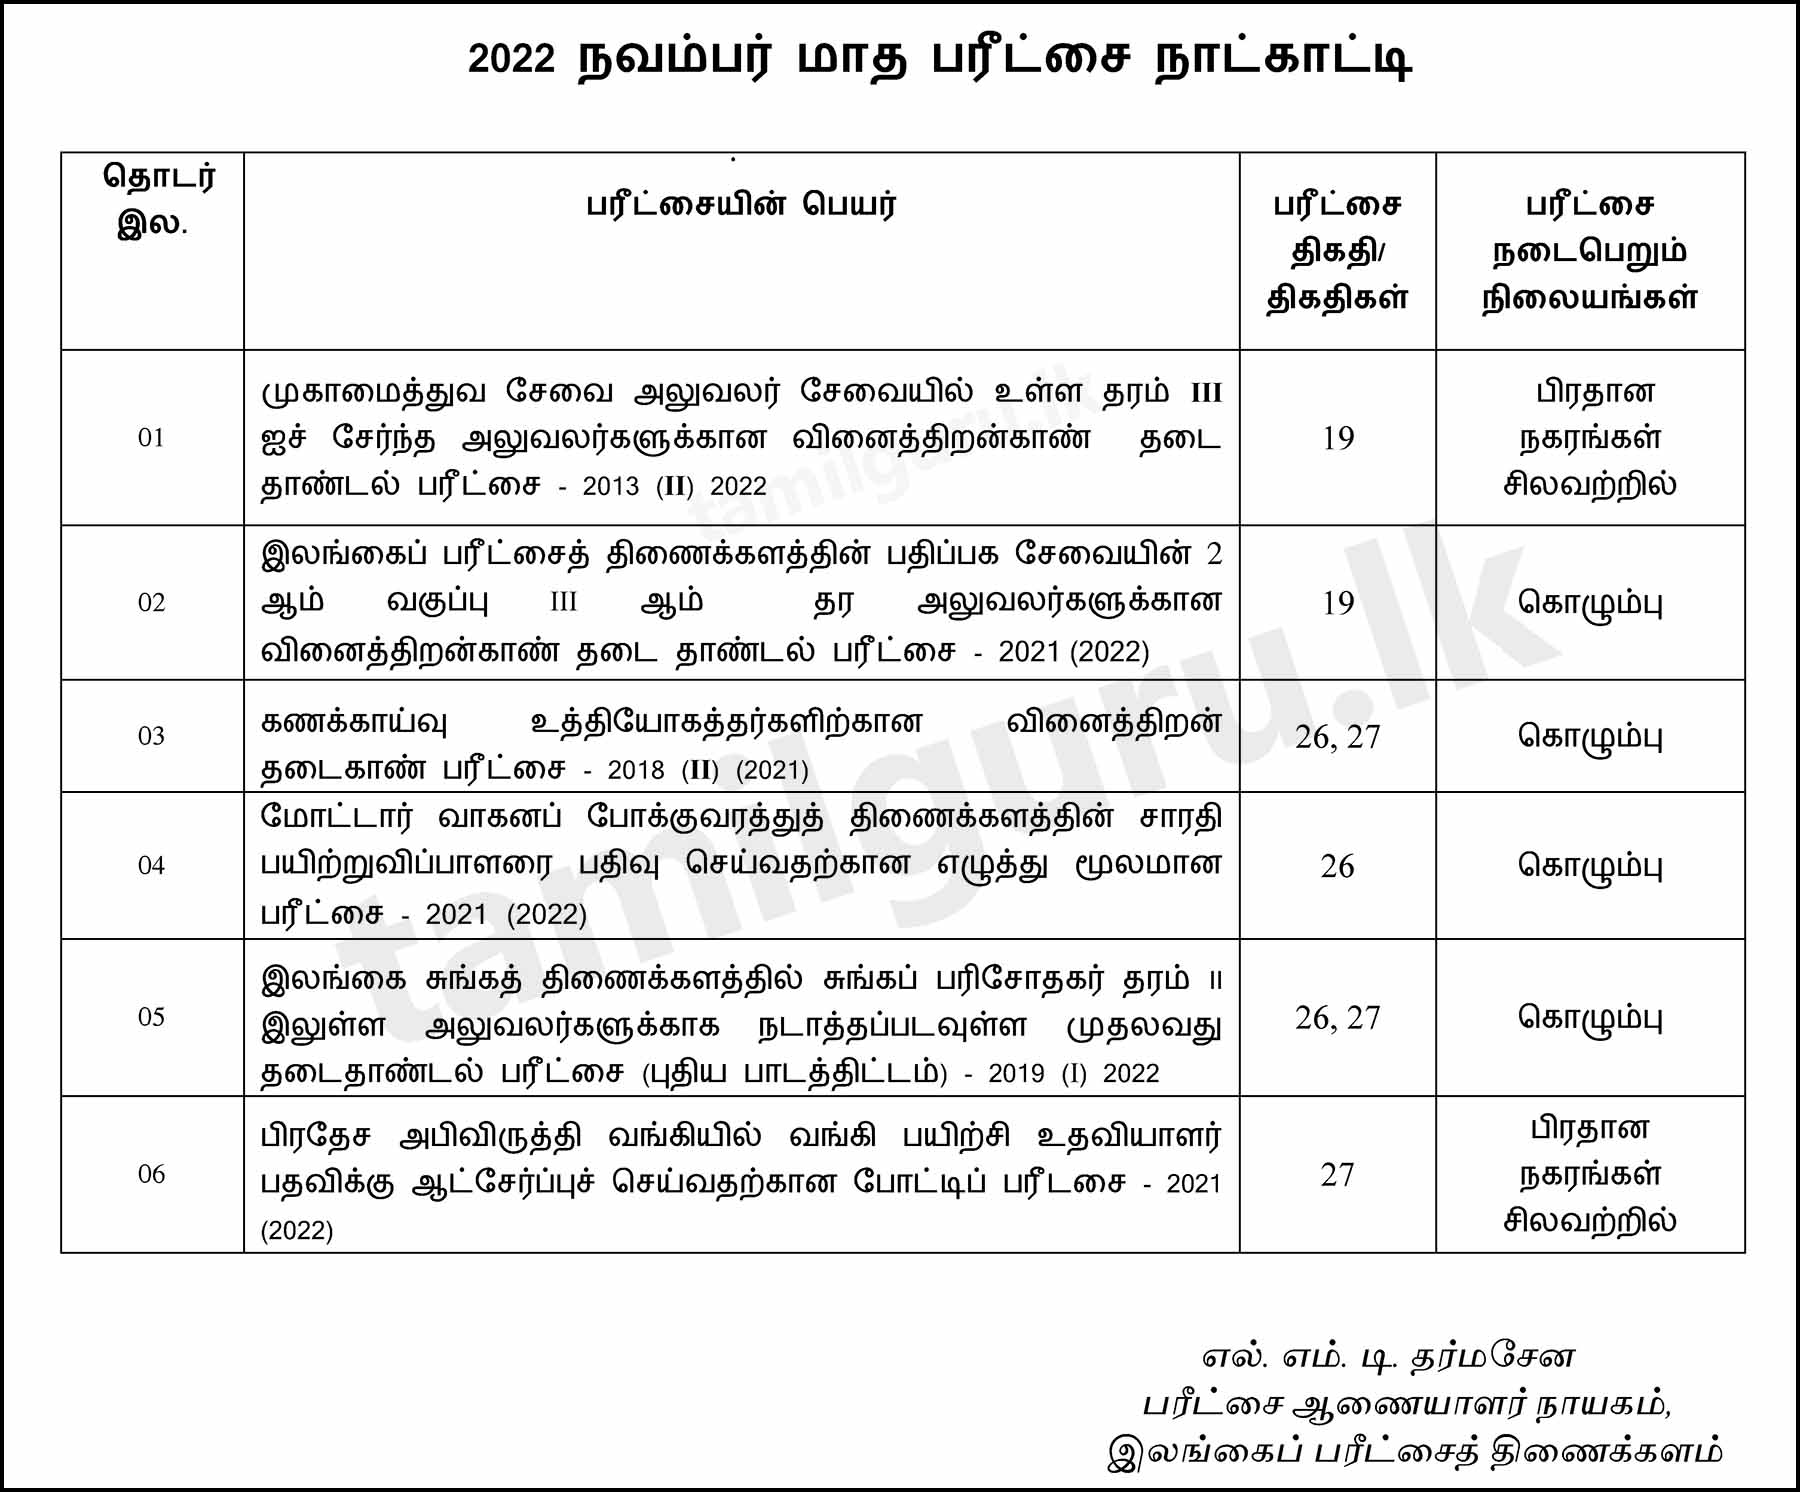 Examination Calendar for November 2022 - Department of Examinations